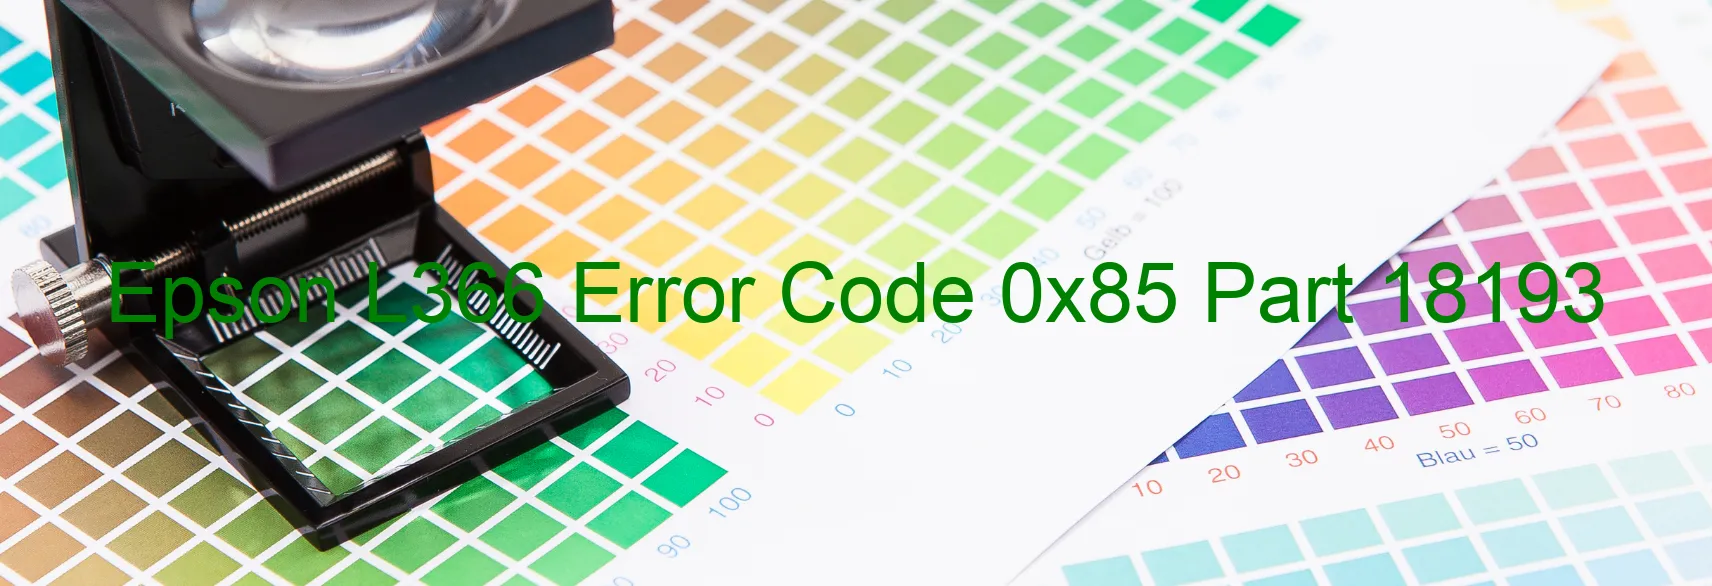 Epson L366 Error Code 0x85 Part 18193